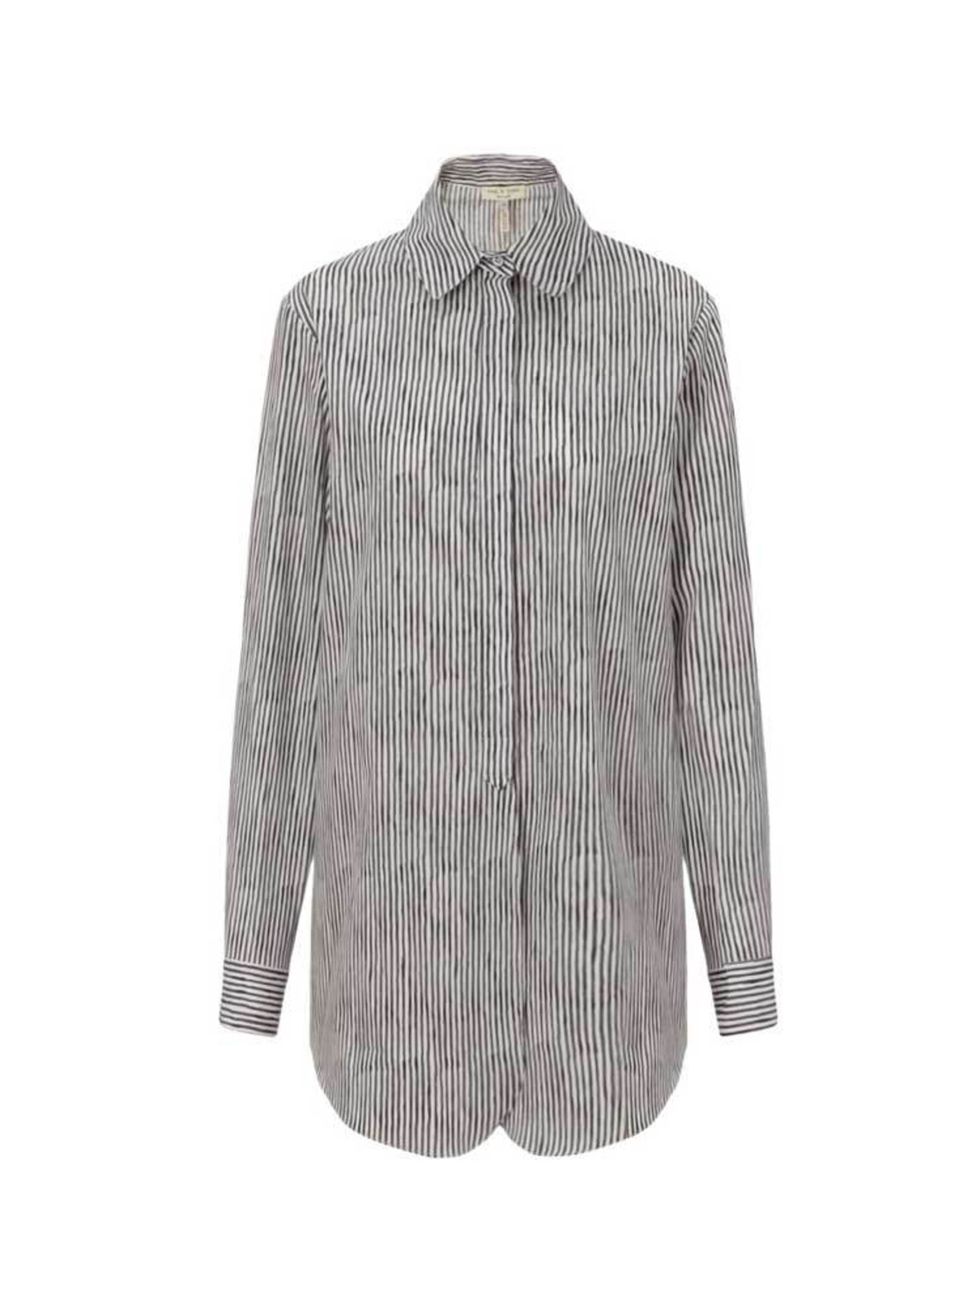 <p>Rag & Bone shirt, £345, from <a href="http://www.avenue32.com/aquarelle-st-century-oxford-shirt-60001/" target="_blank">Avenue32</a></p>